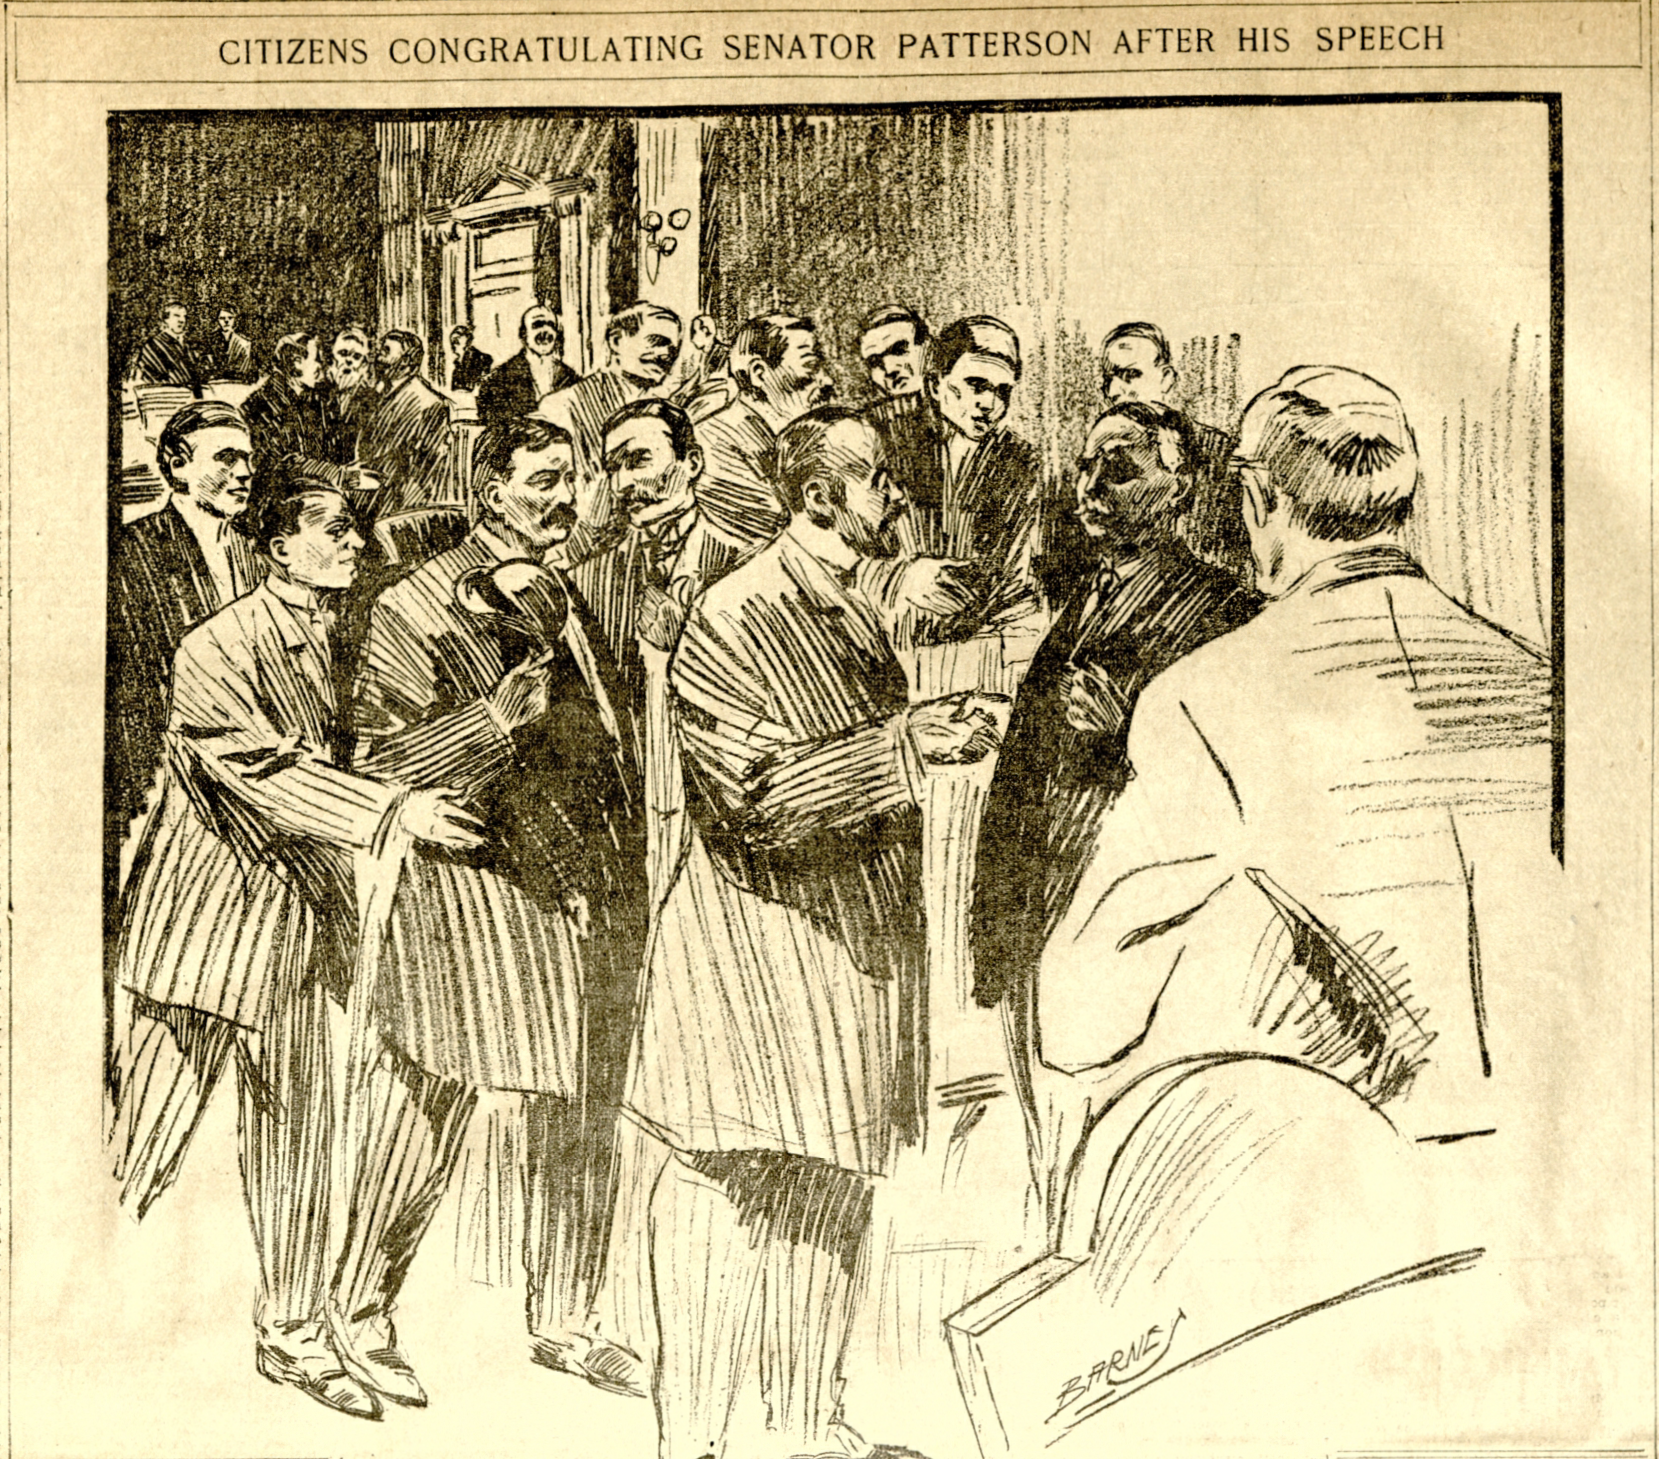 A 1905 political cartoon depicting a group of men, titled: "Citizens congratulating Senator Patterson after his speech."